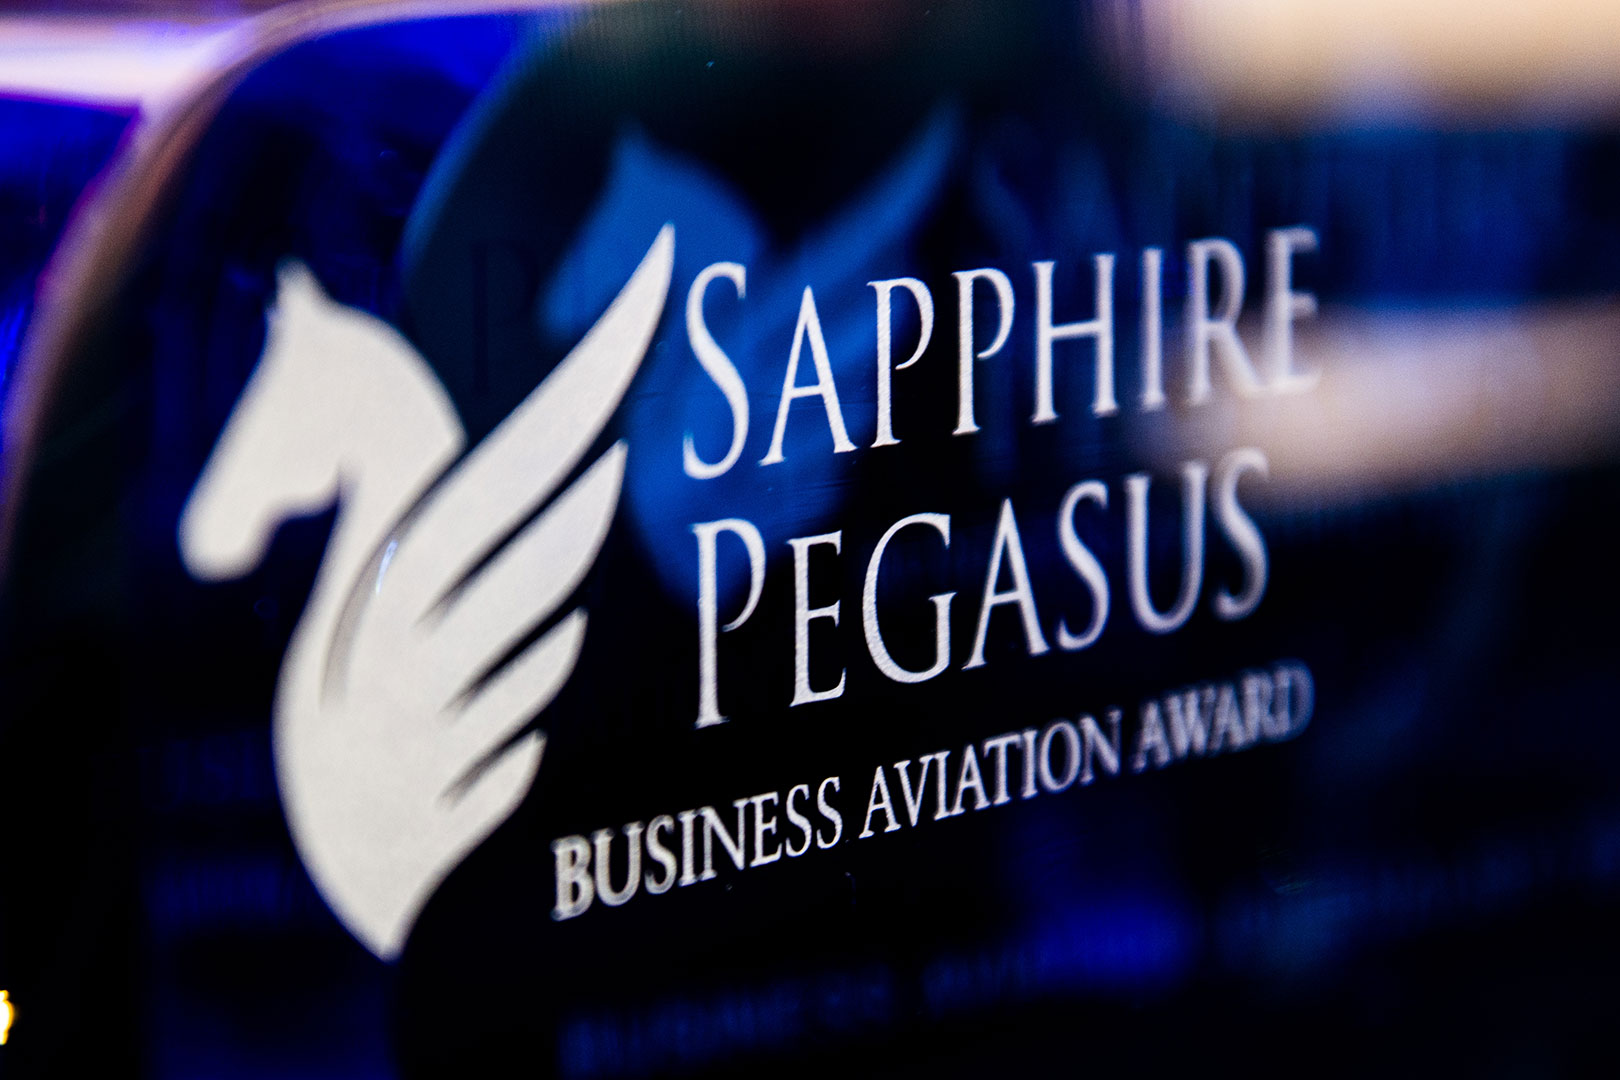 Sapphire Pegasus Business Aviation Awards 2015